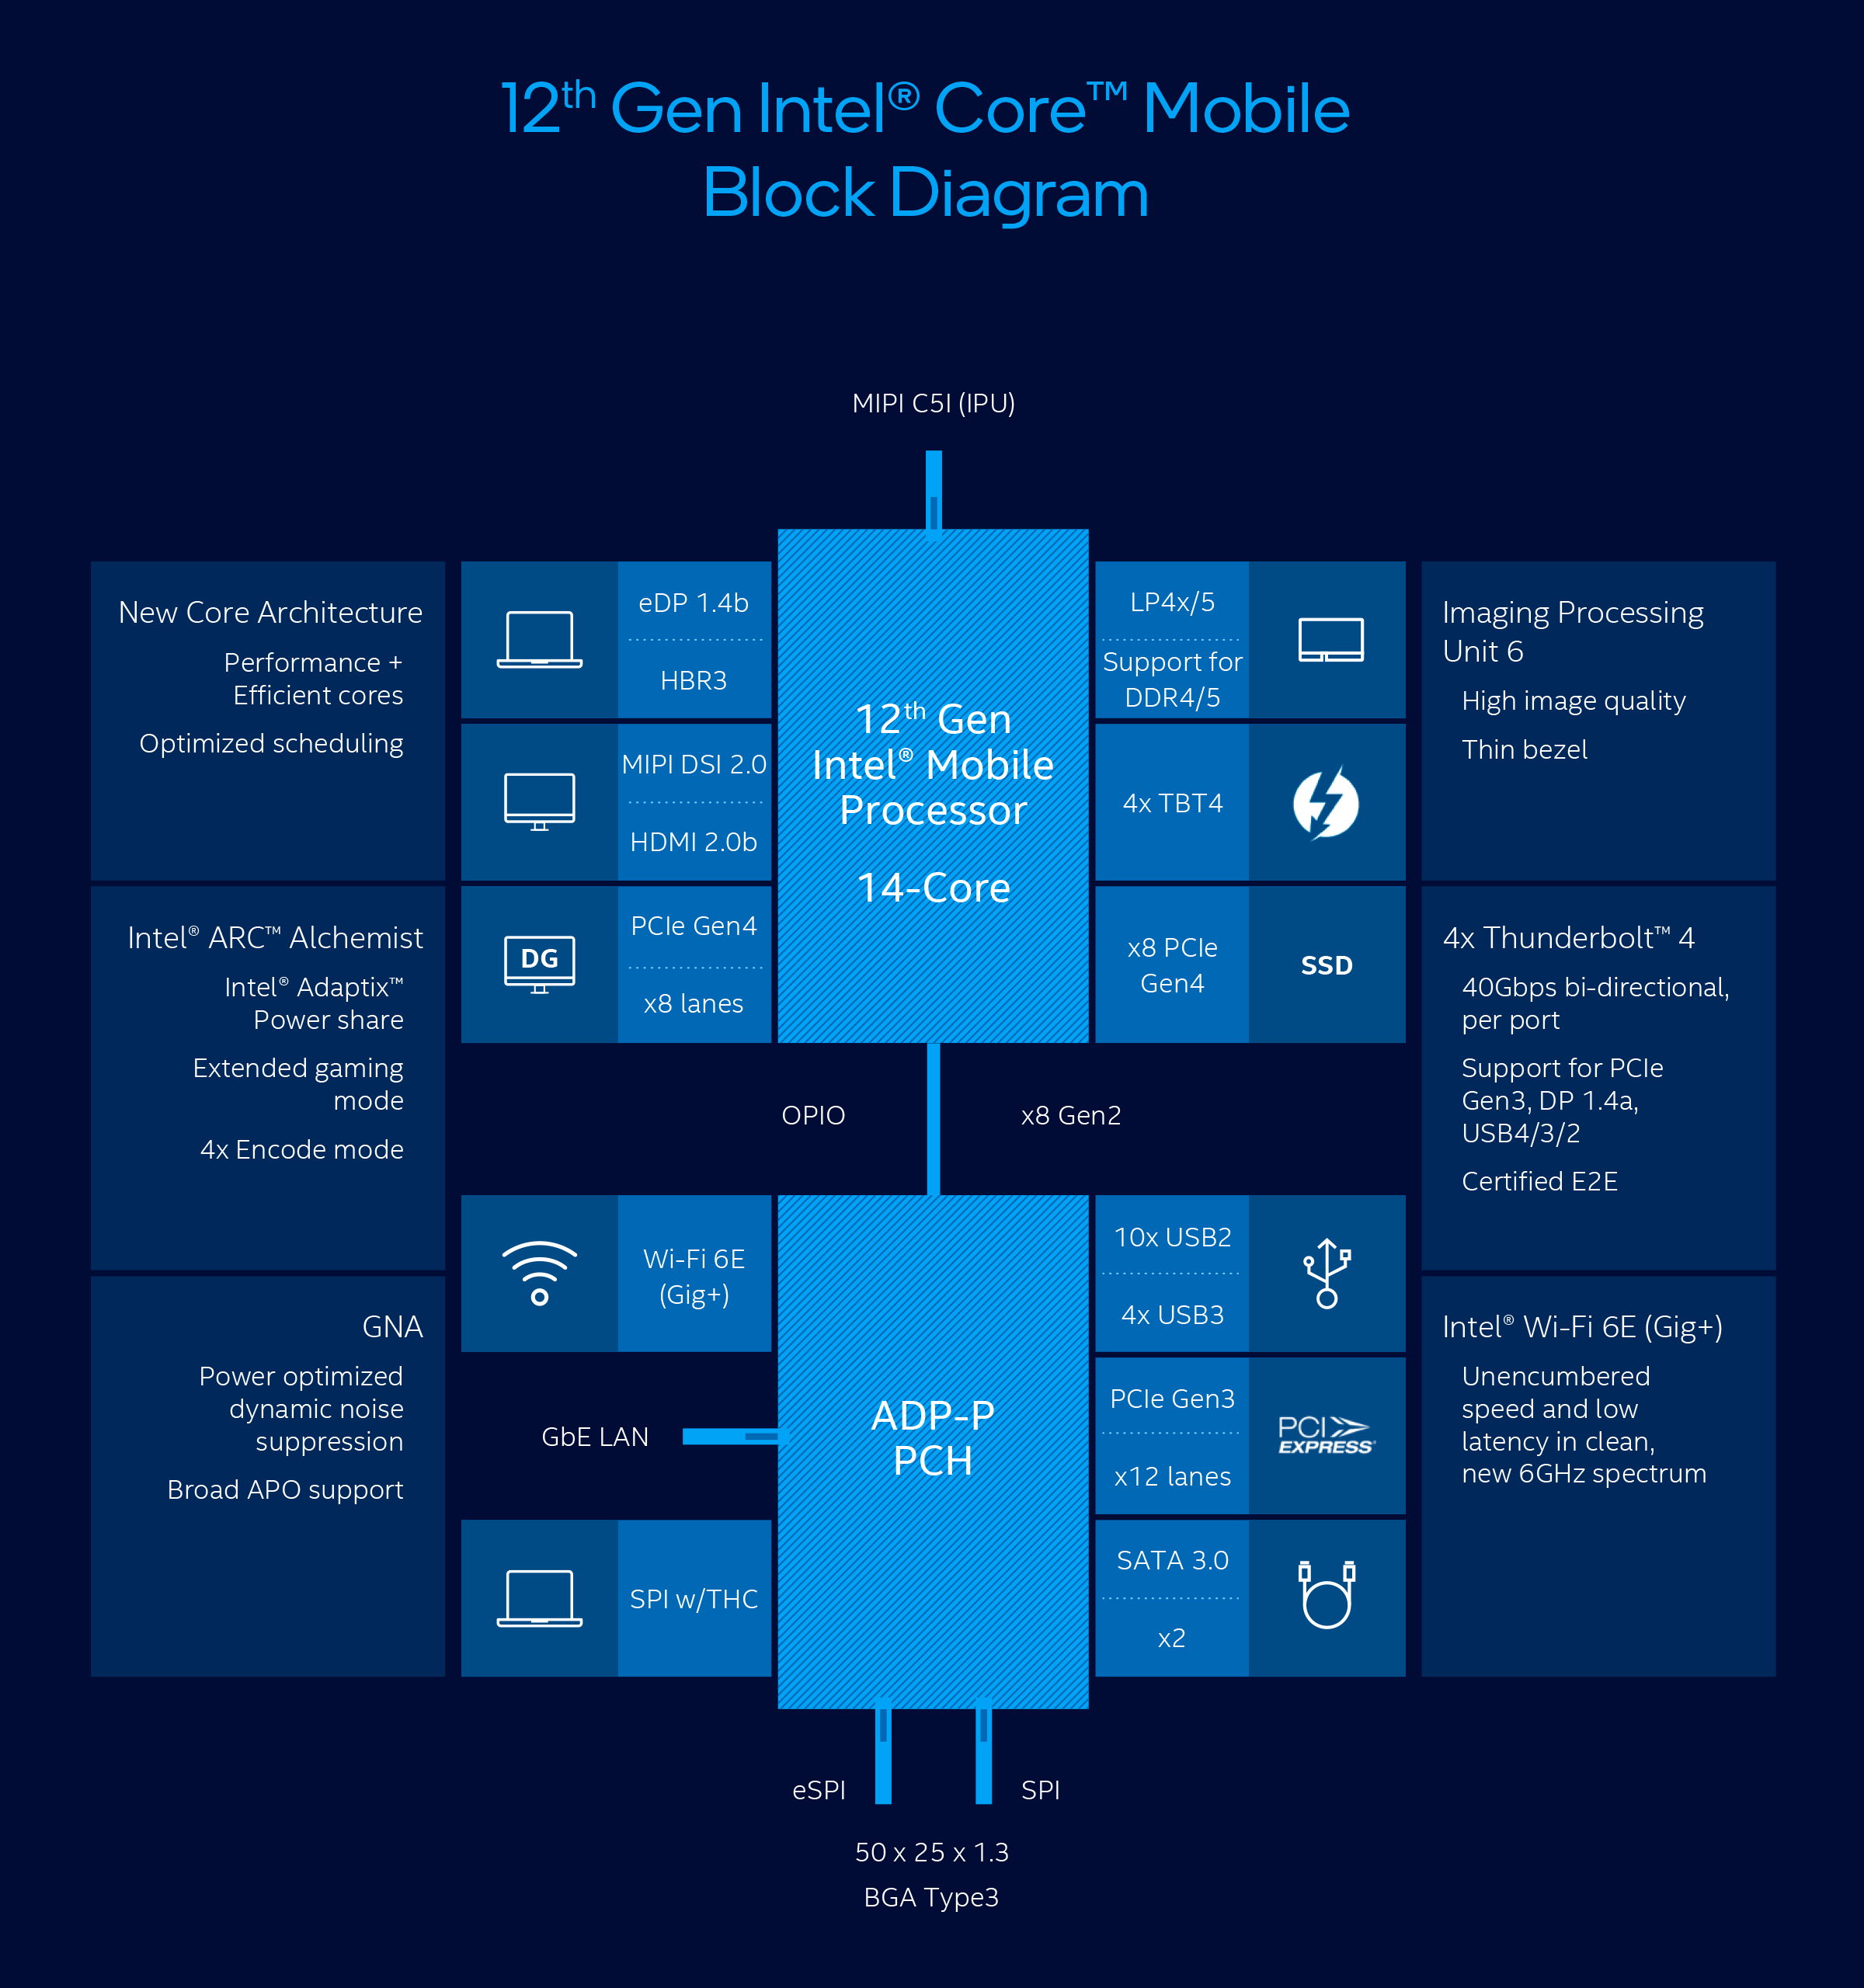 12th Gen Intel Core Mobile Block Diagram